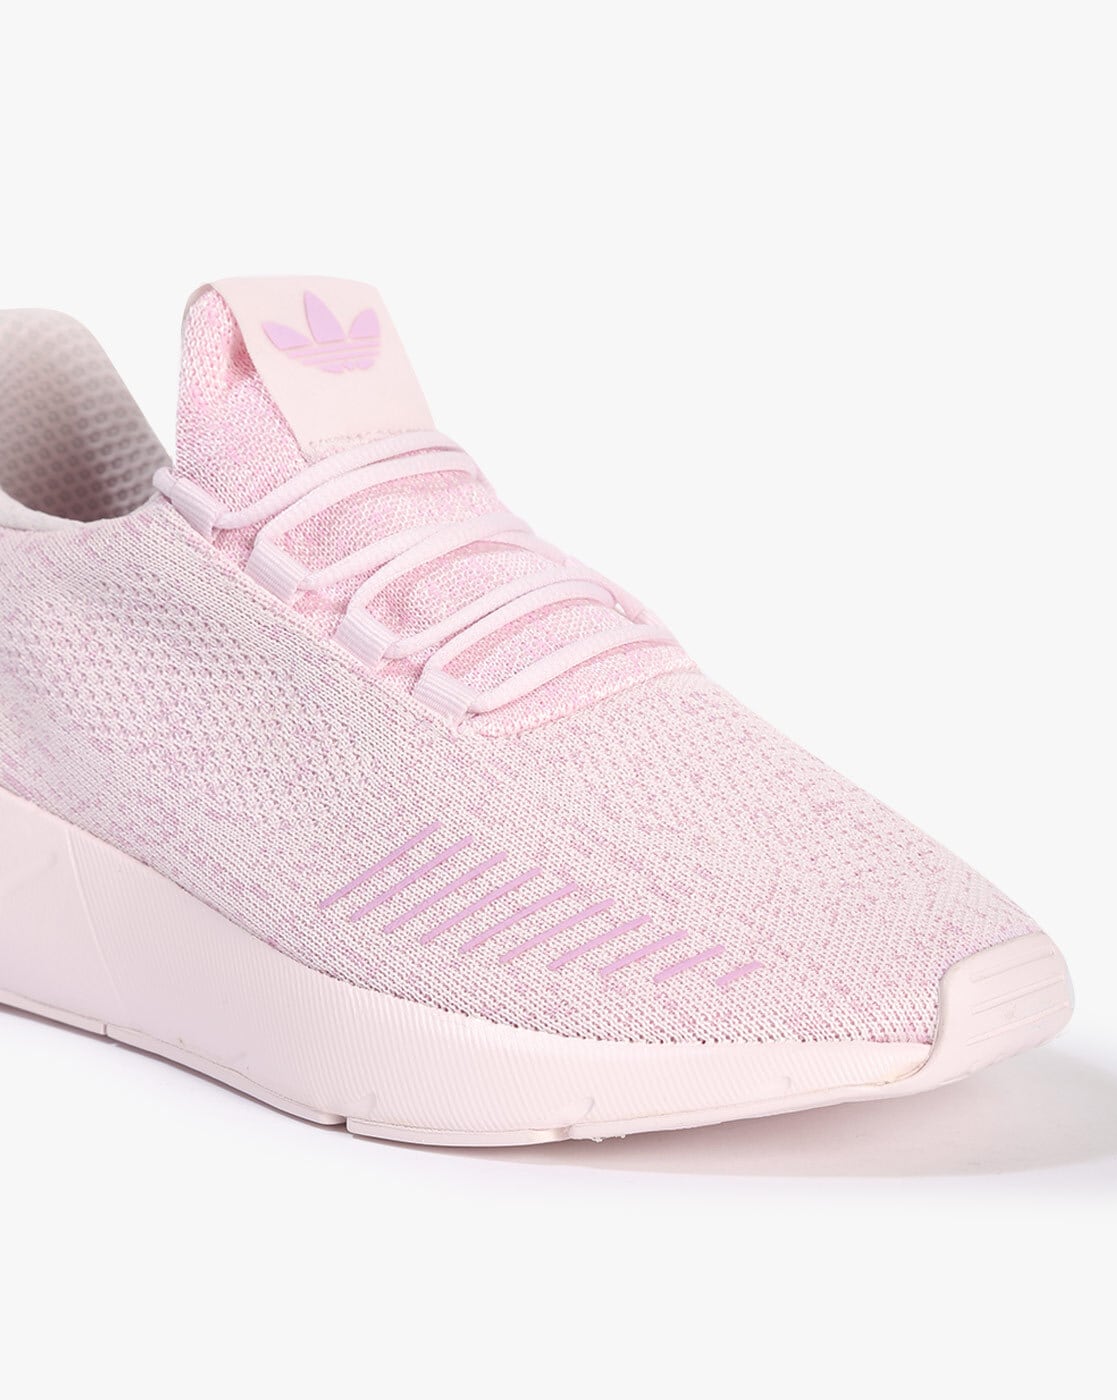 Women's Shoes - adidas by Stella McCartney Ultraboost Light Shoes - Pink |  adidas Oman